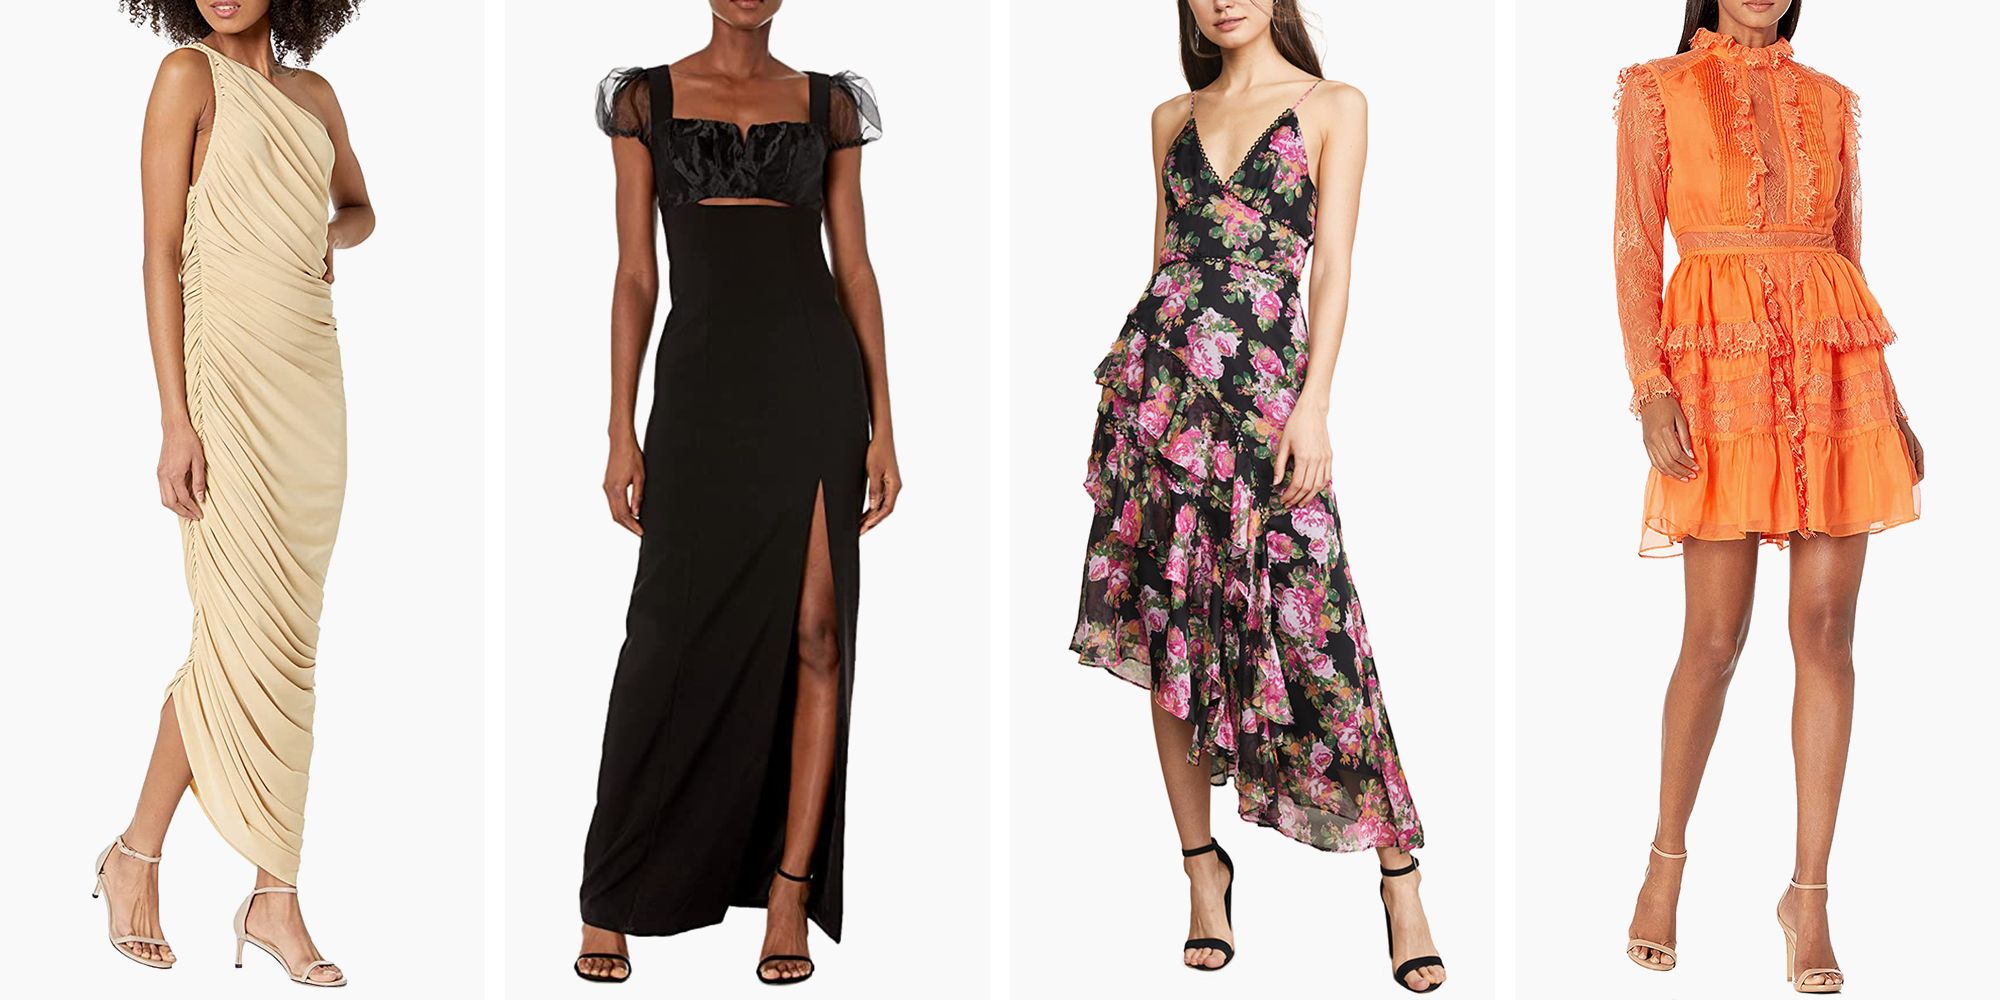 Best designer dresses on Amazon | Dresses Images 2022